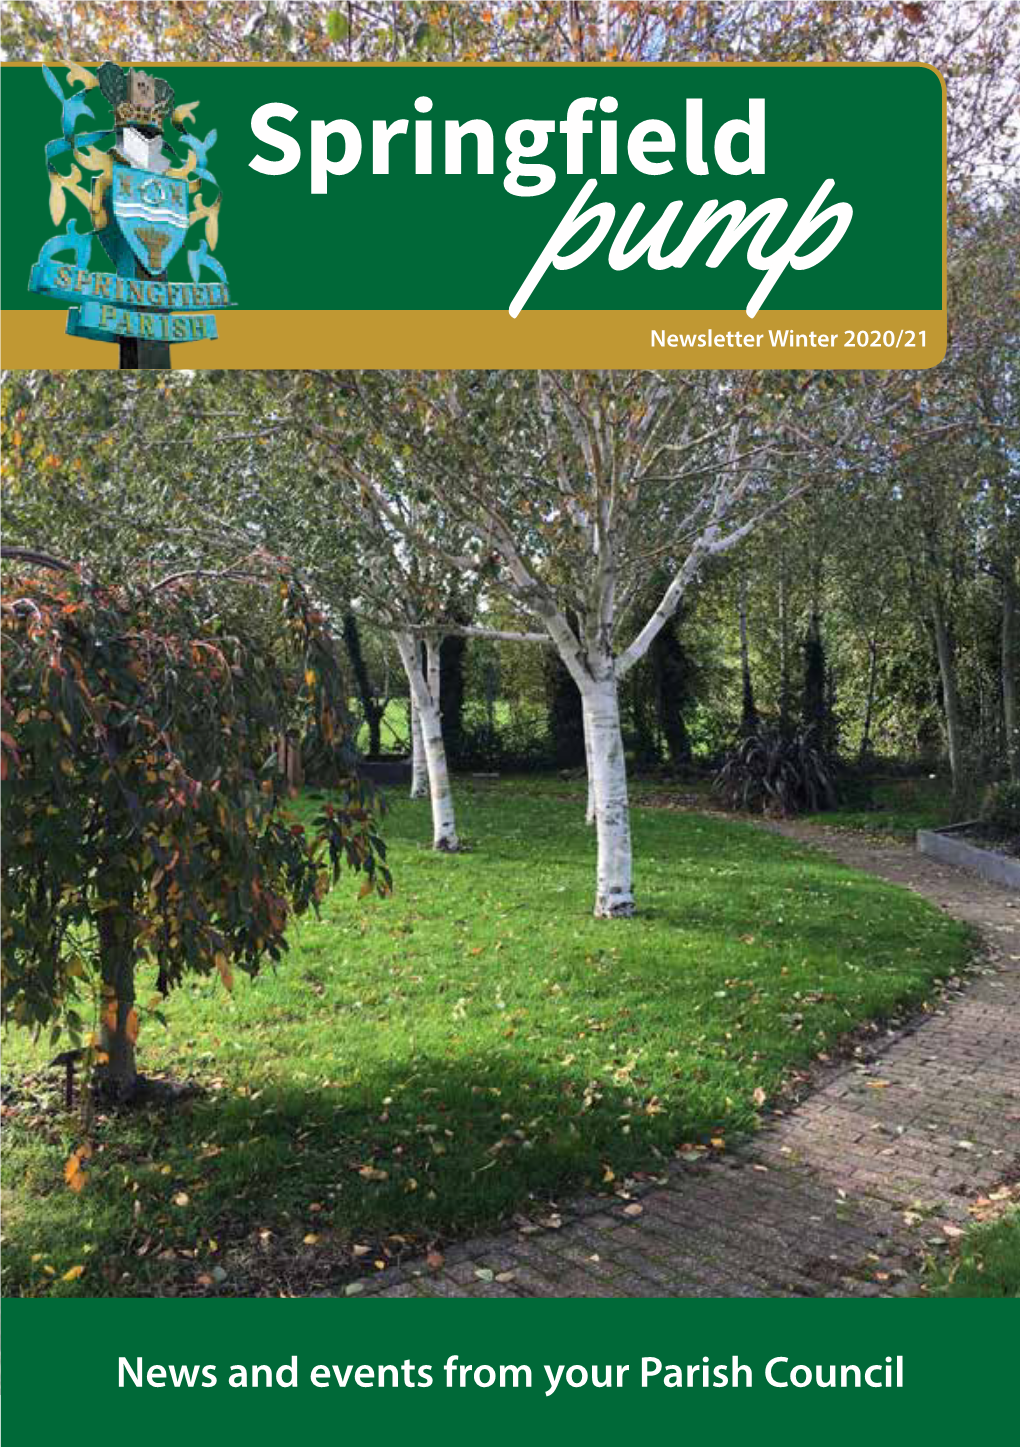 Pump Newsletter Winter 2020/21